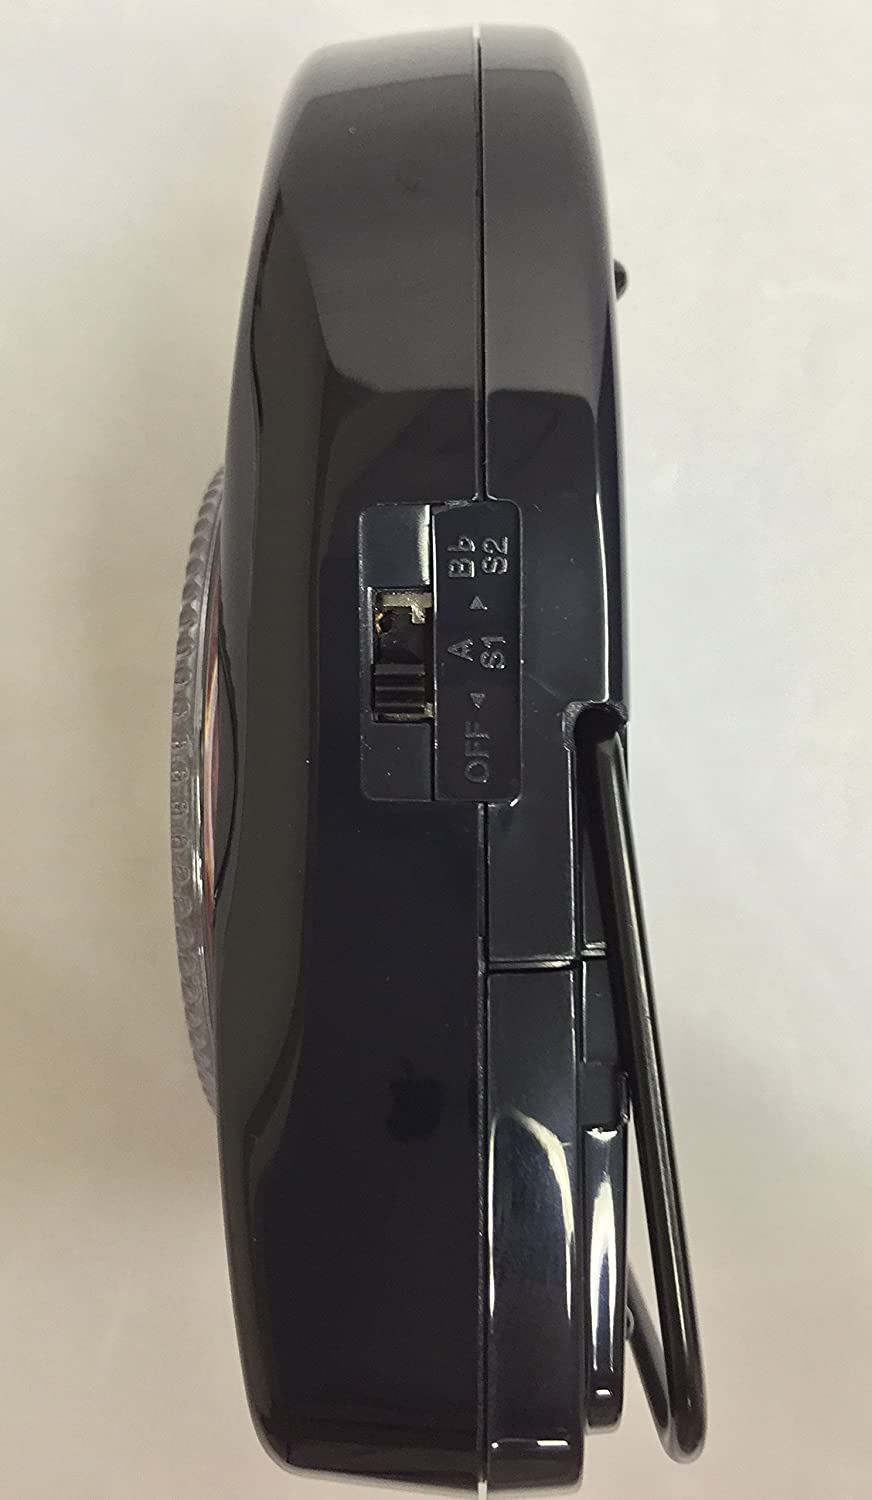 Seiko SQ50-V Quartz Portable Metronome